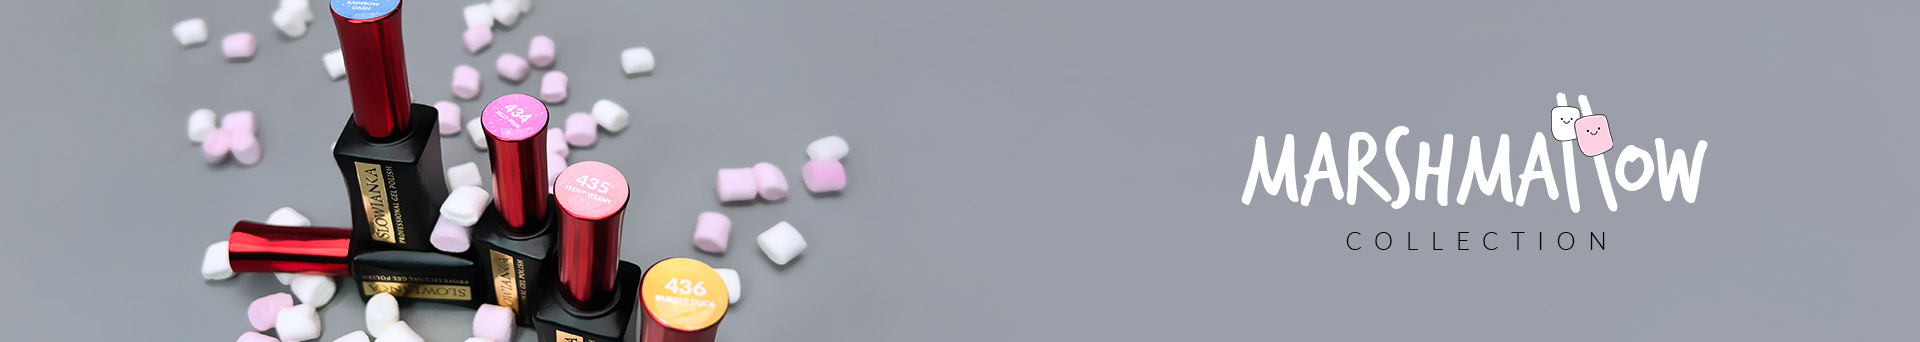 Marshmallow Collection  - Linia Podstawowa